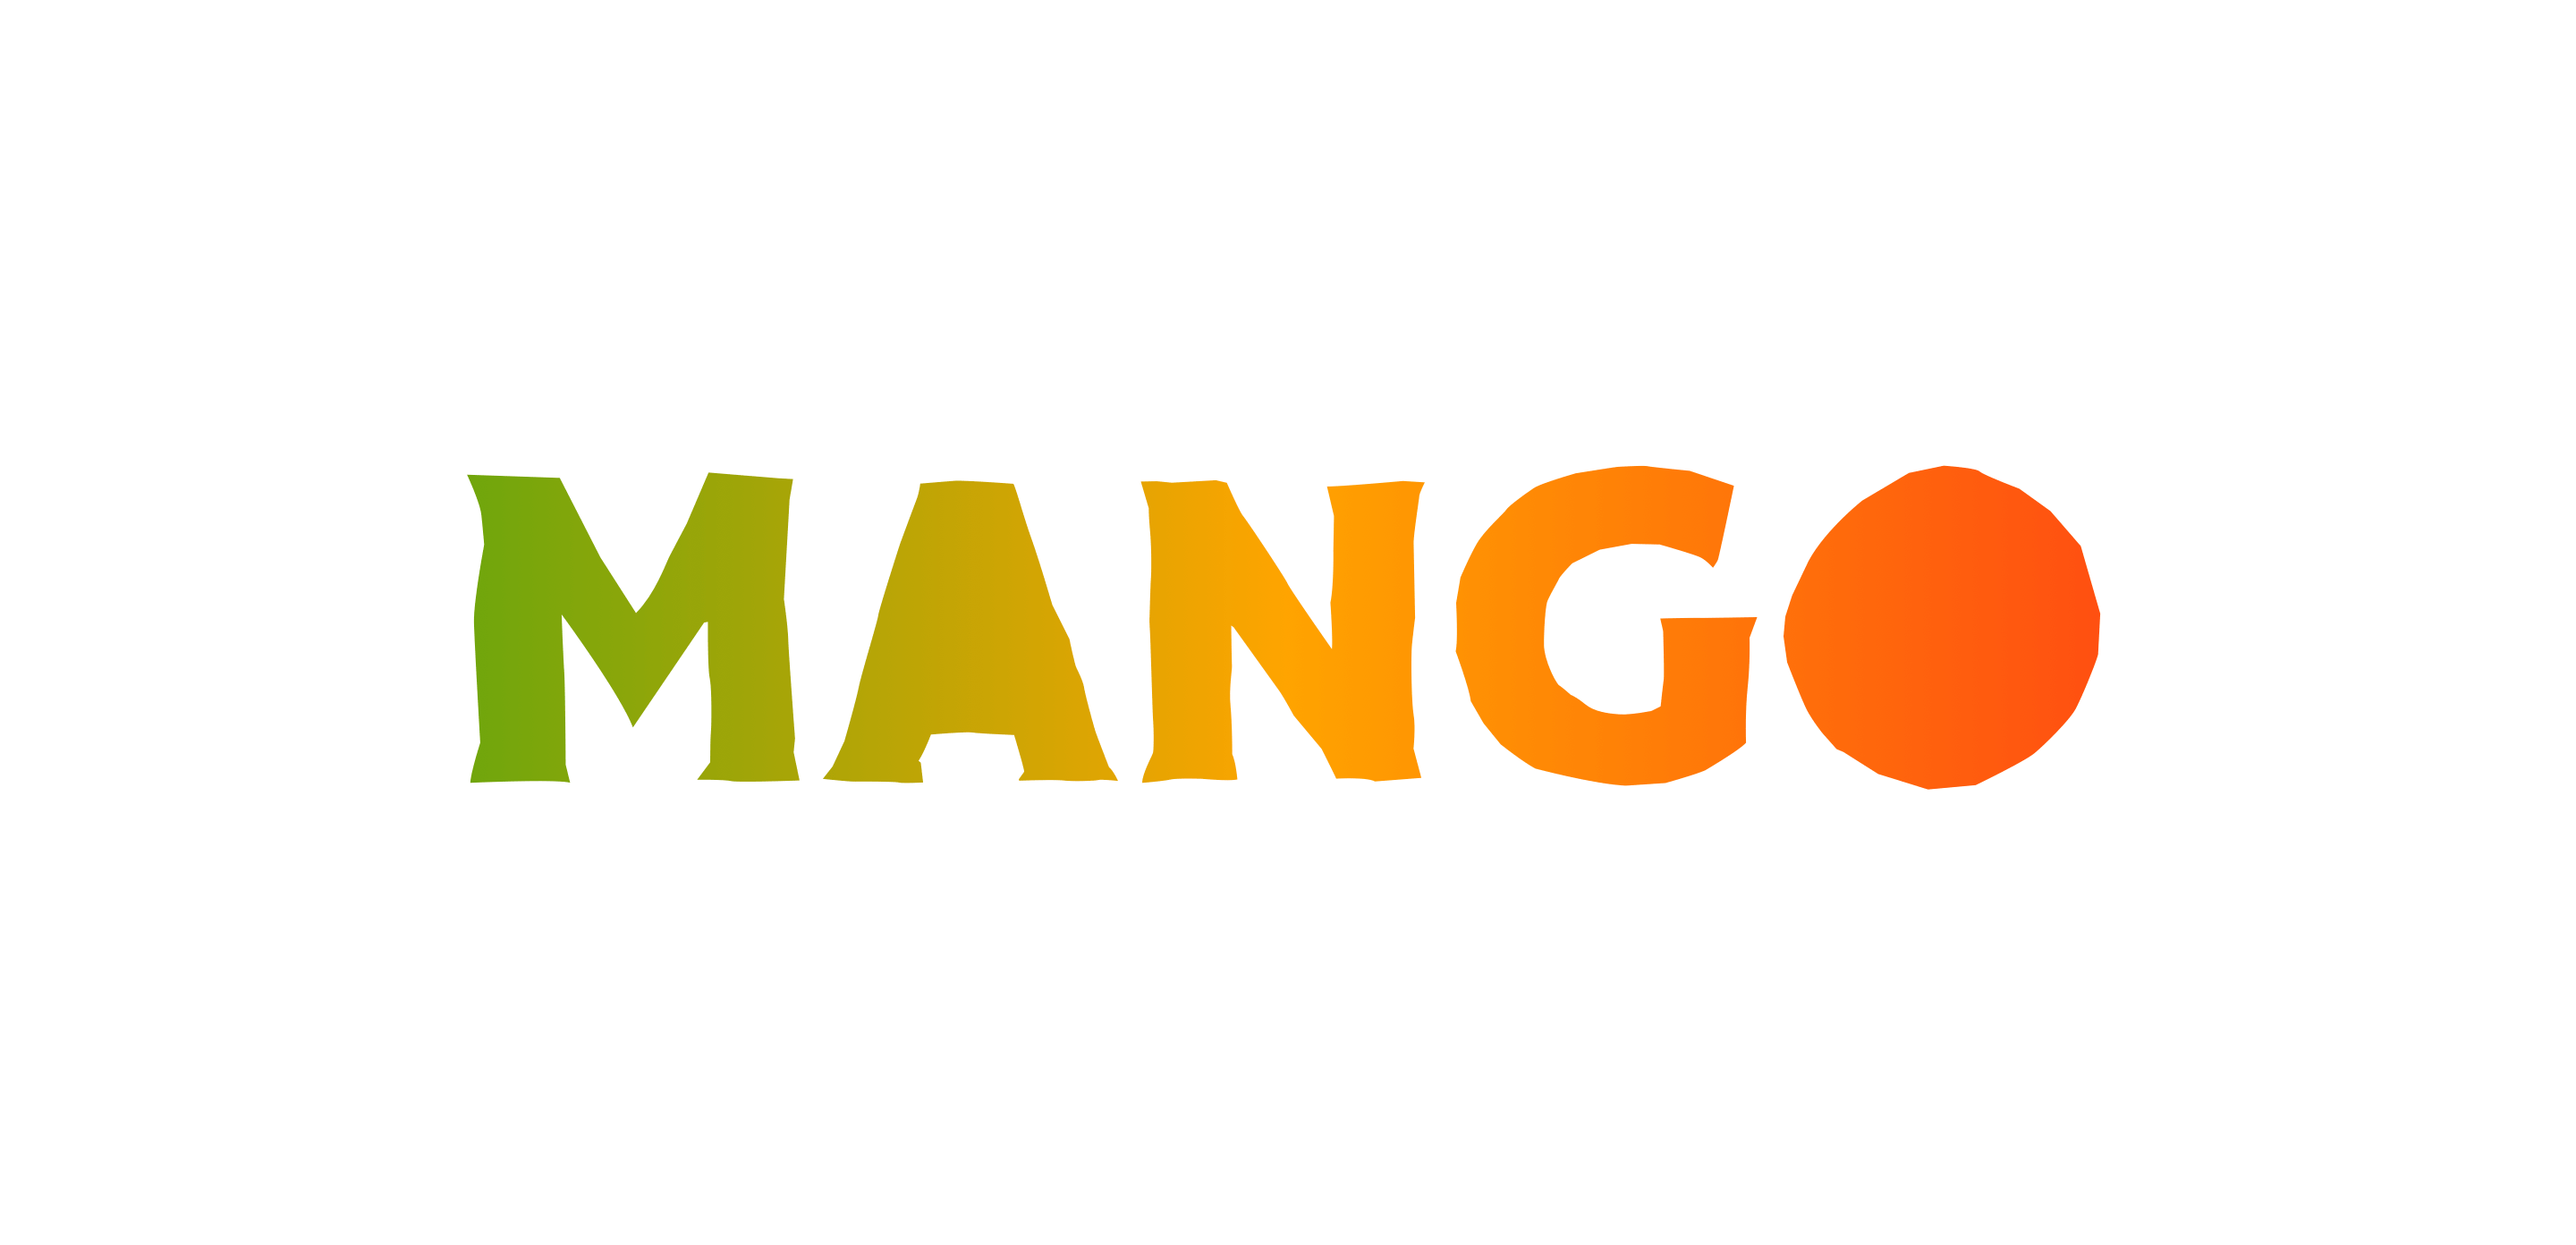 I.C. Light Mango Rebrand | Beer Branding by Top Hat